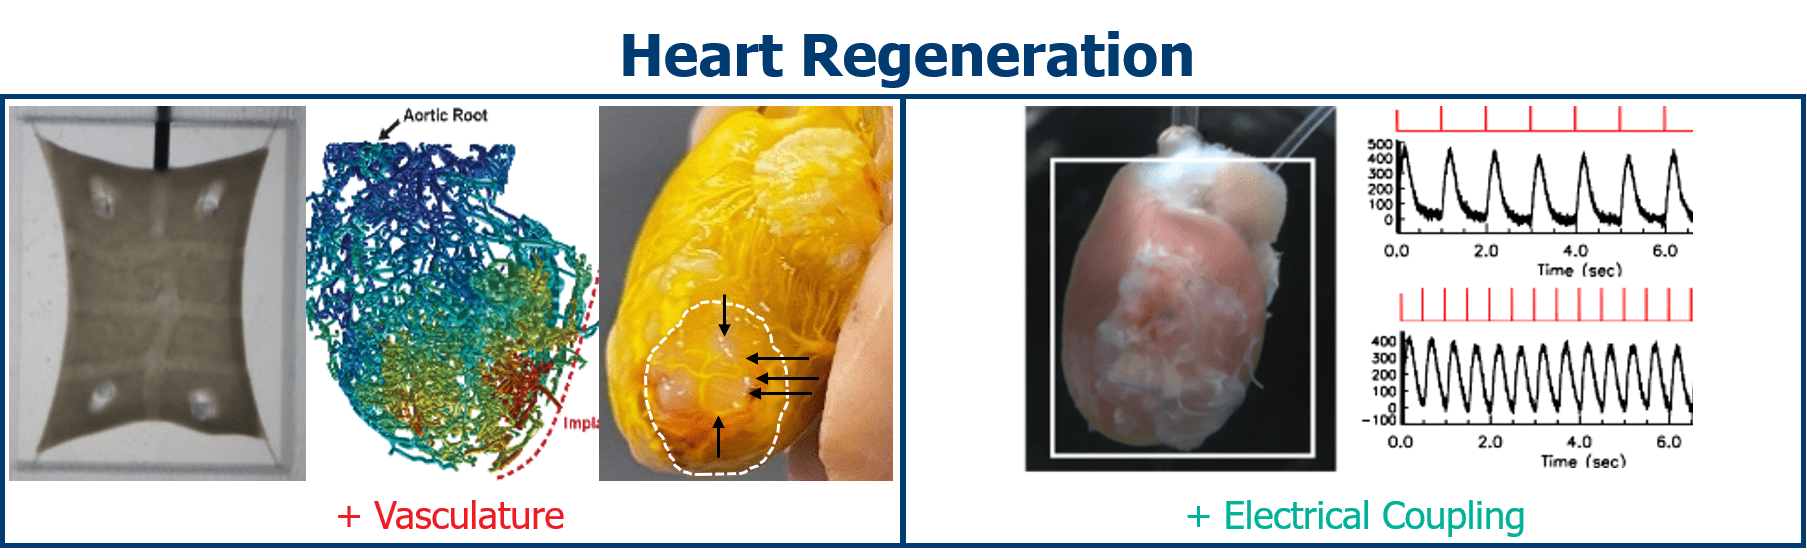 Heart Regeneration Images